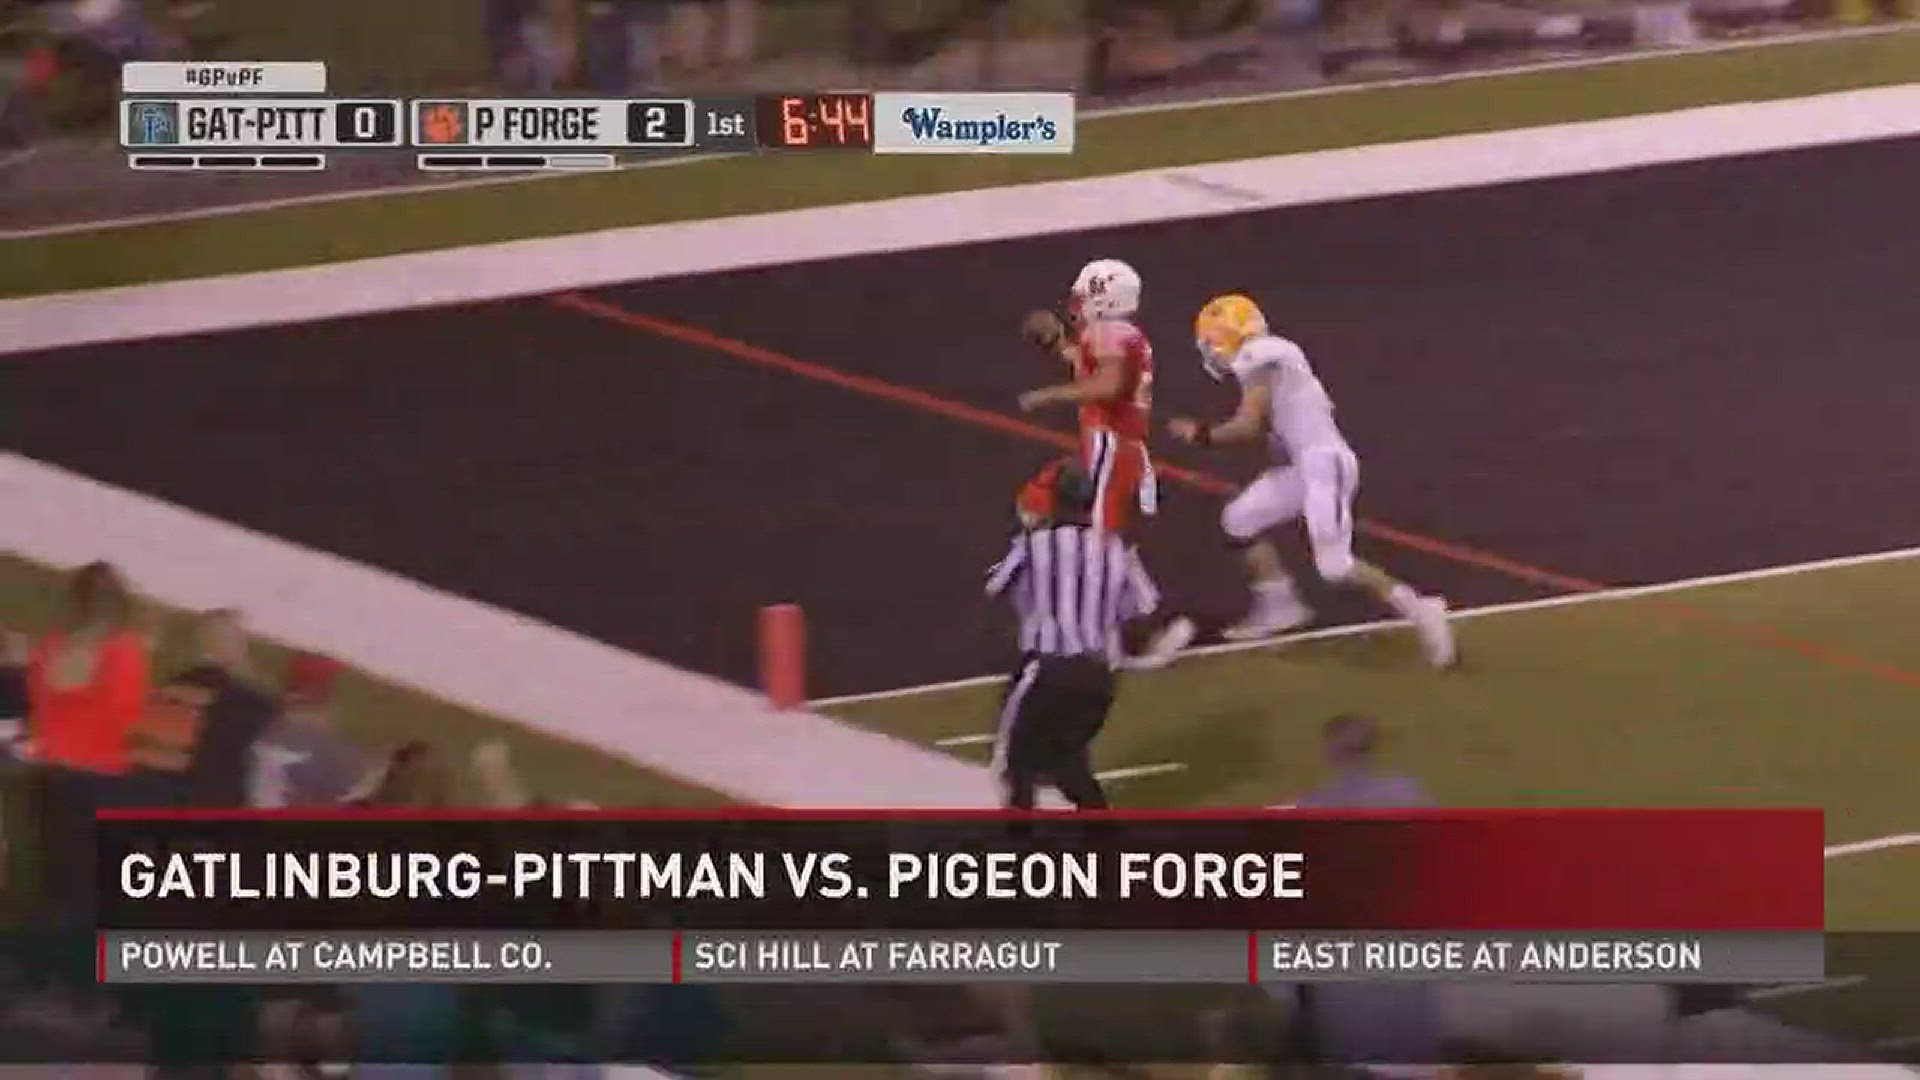 Pigeon Forge beat Gatlinburg-Pittman 38-18